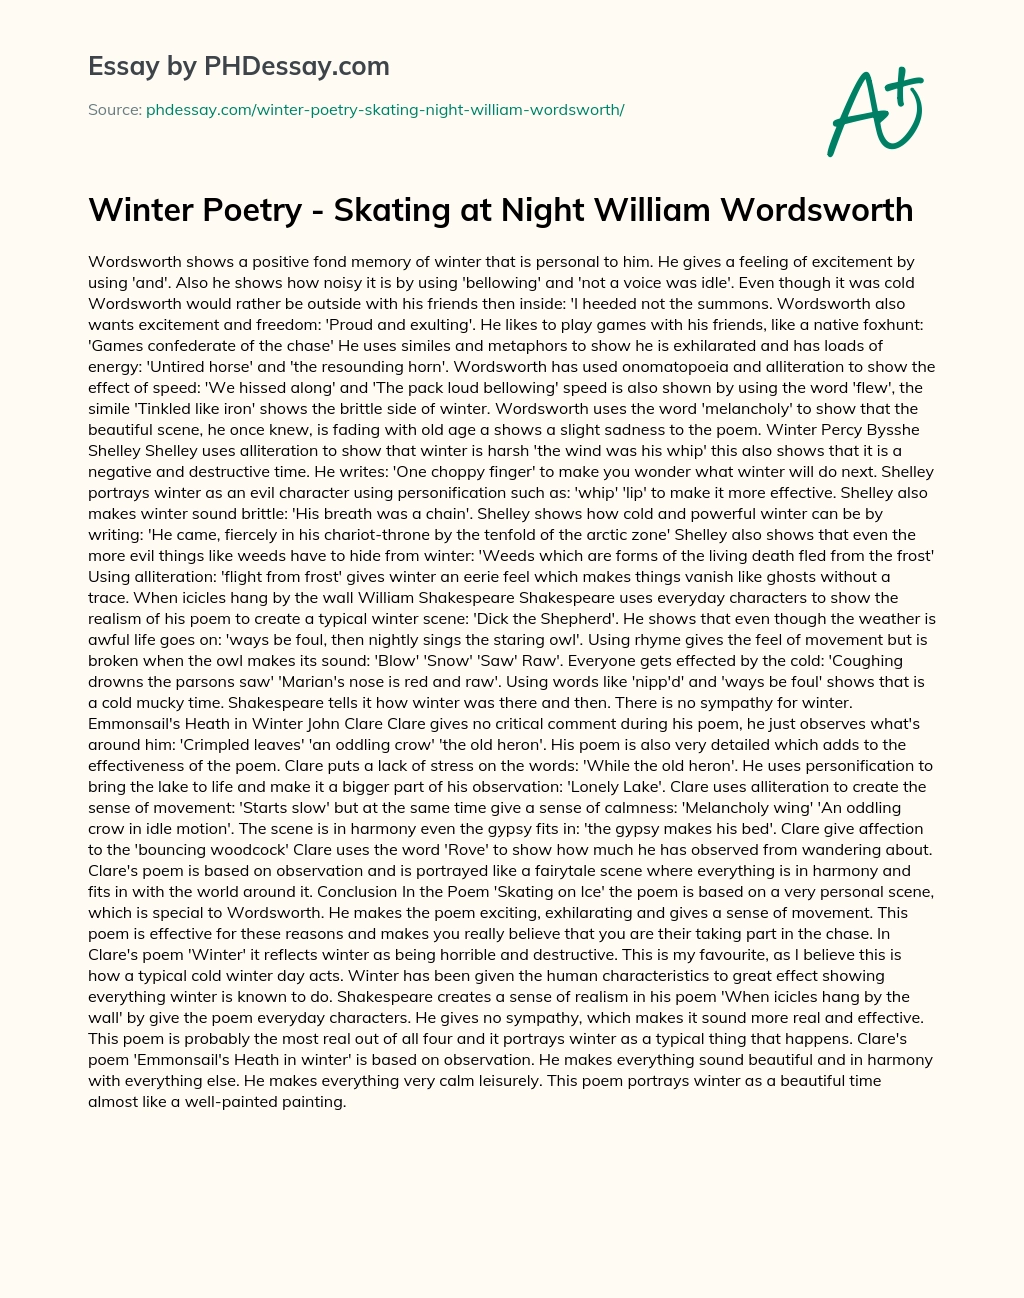 Winter Poetry – Skating at Night William Wordsworth essay